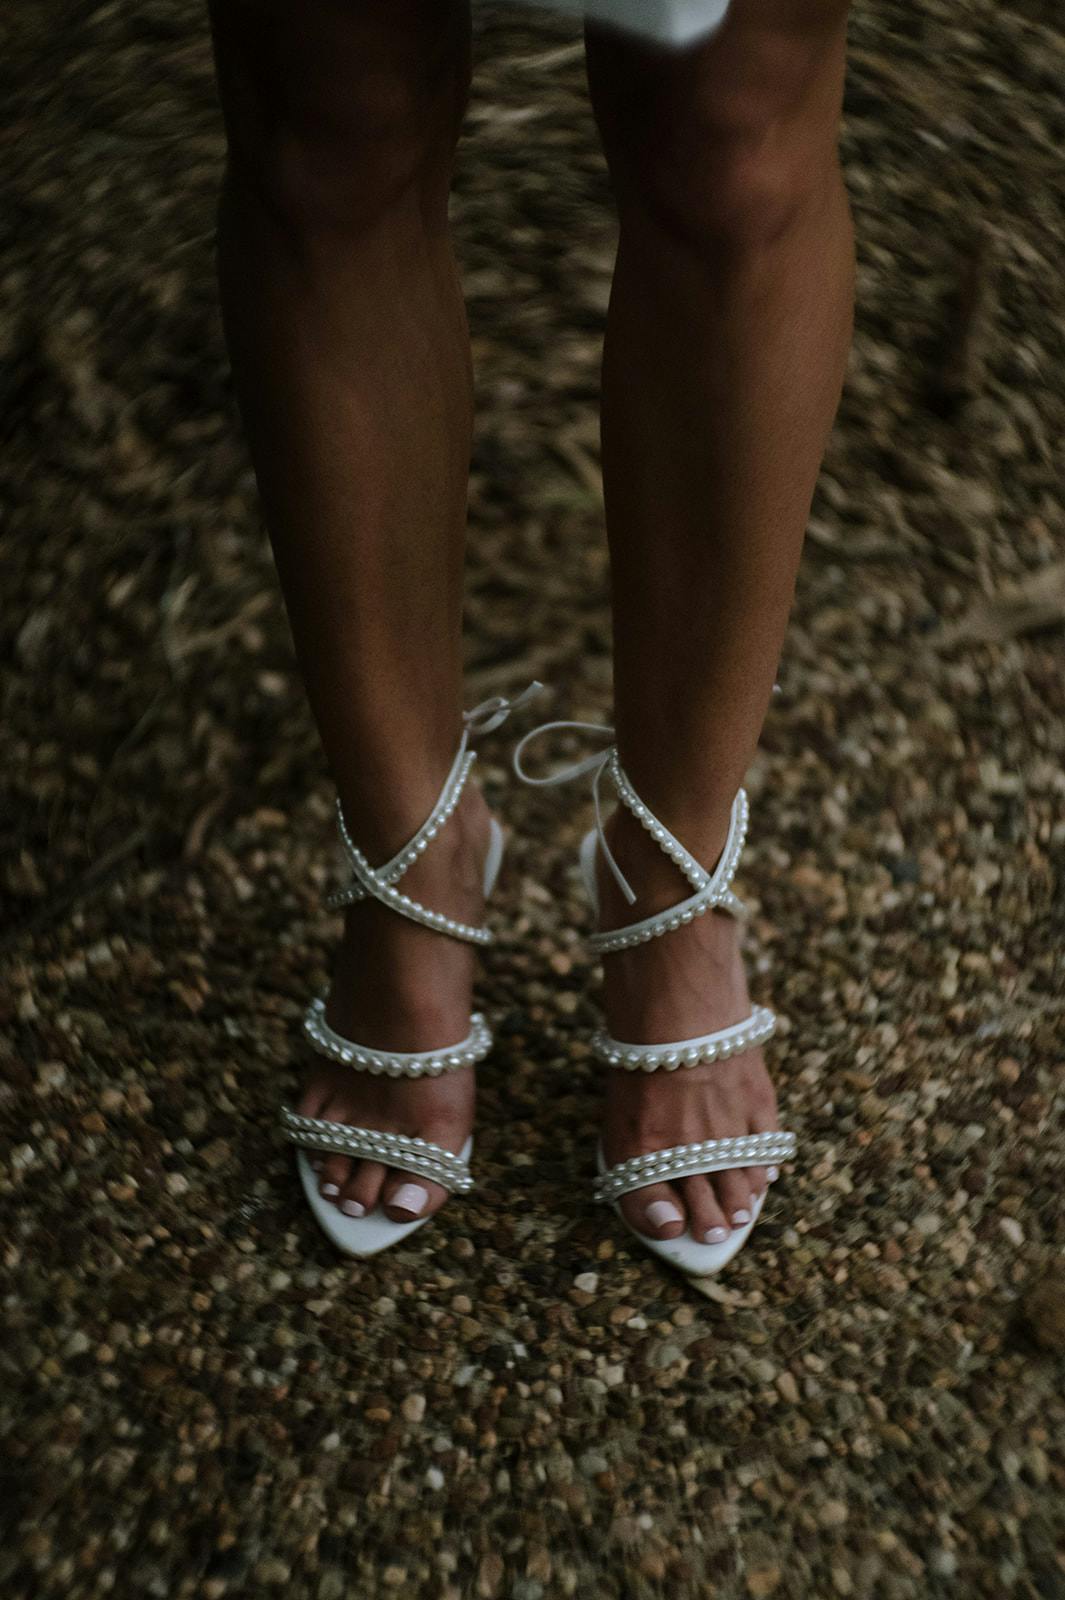 a photograph of a bride's wedding shoes